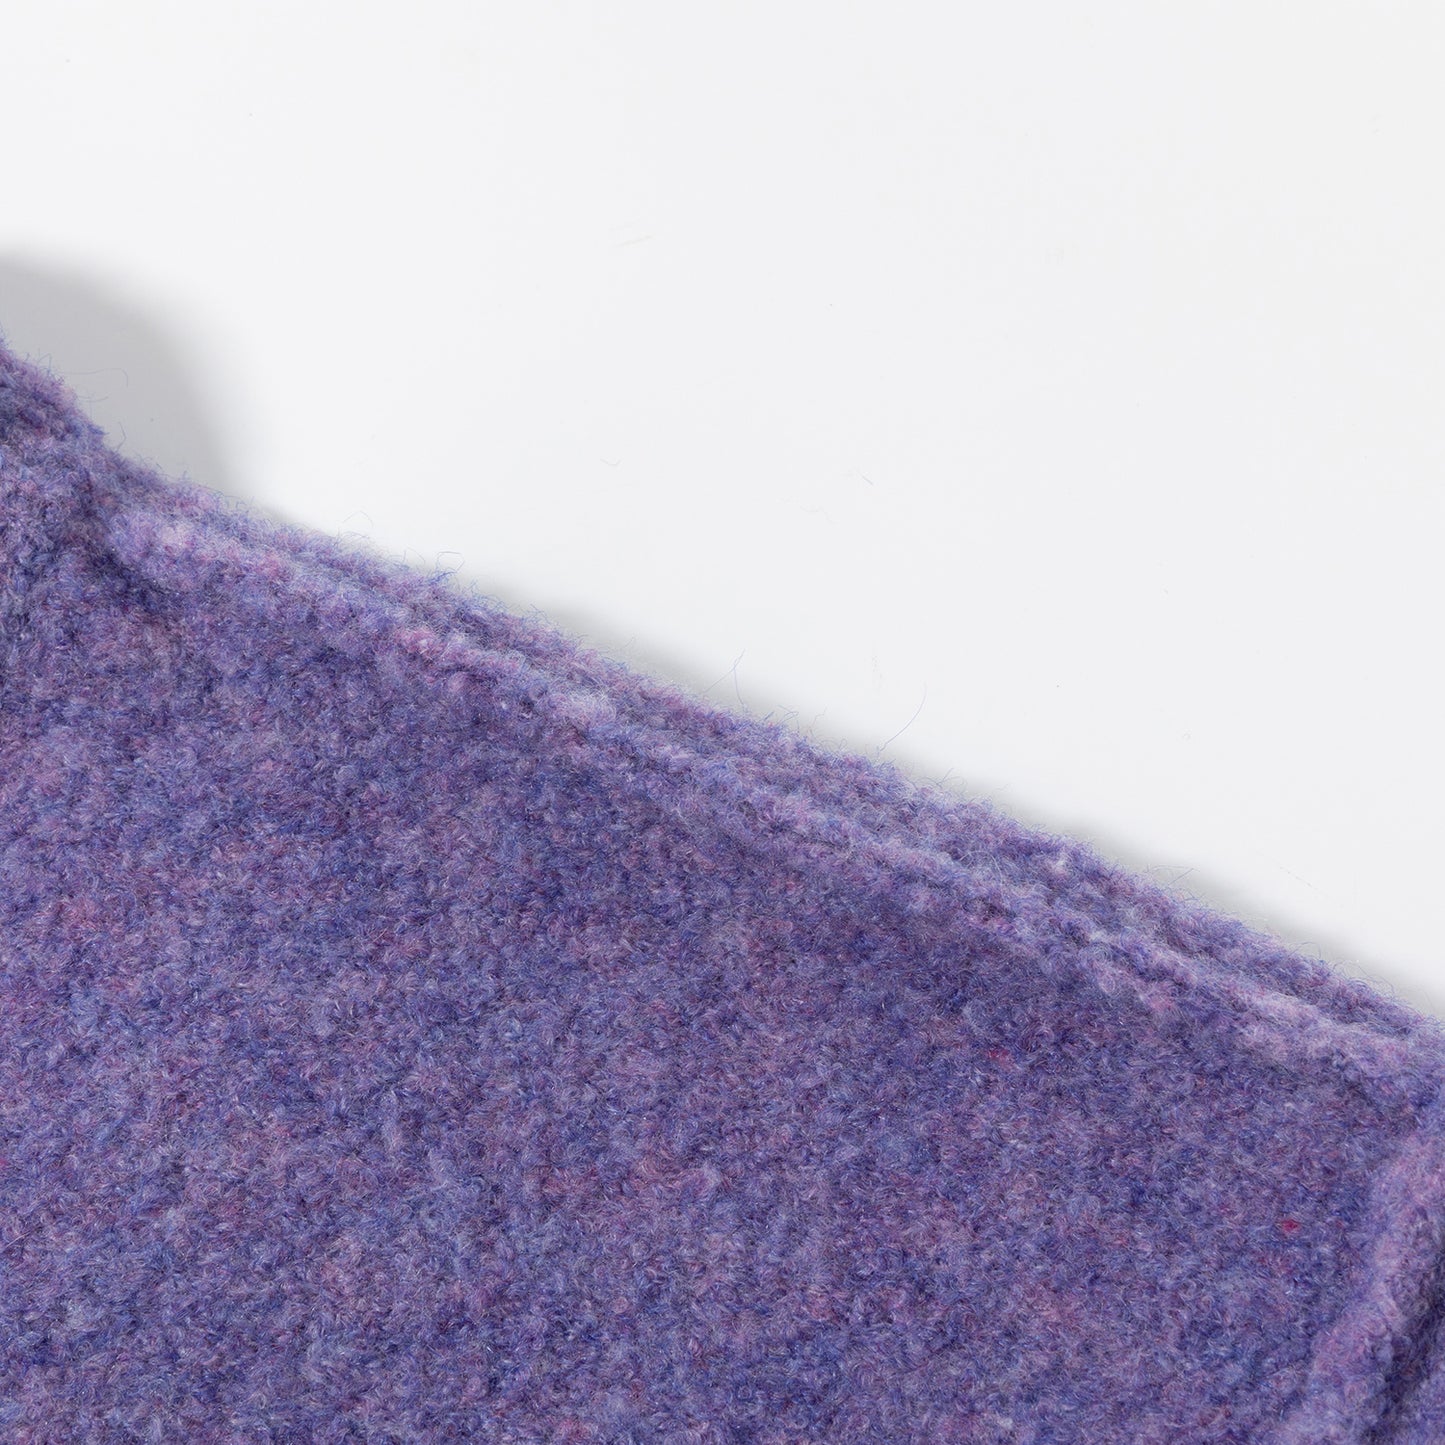 Sweater Blend, purple